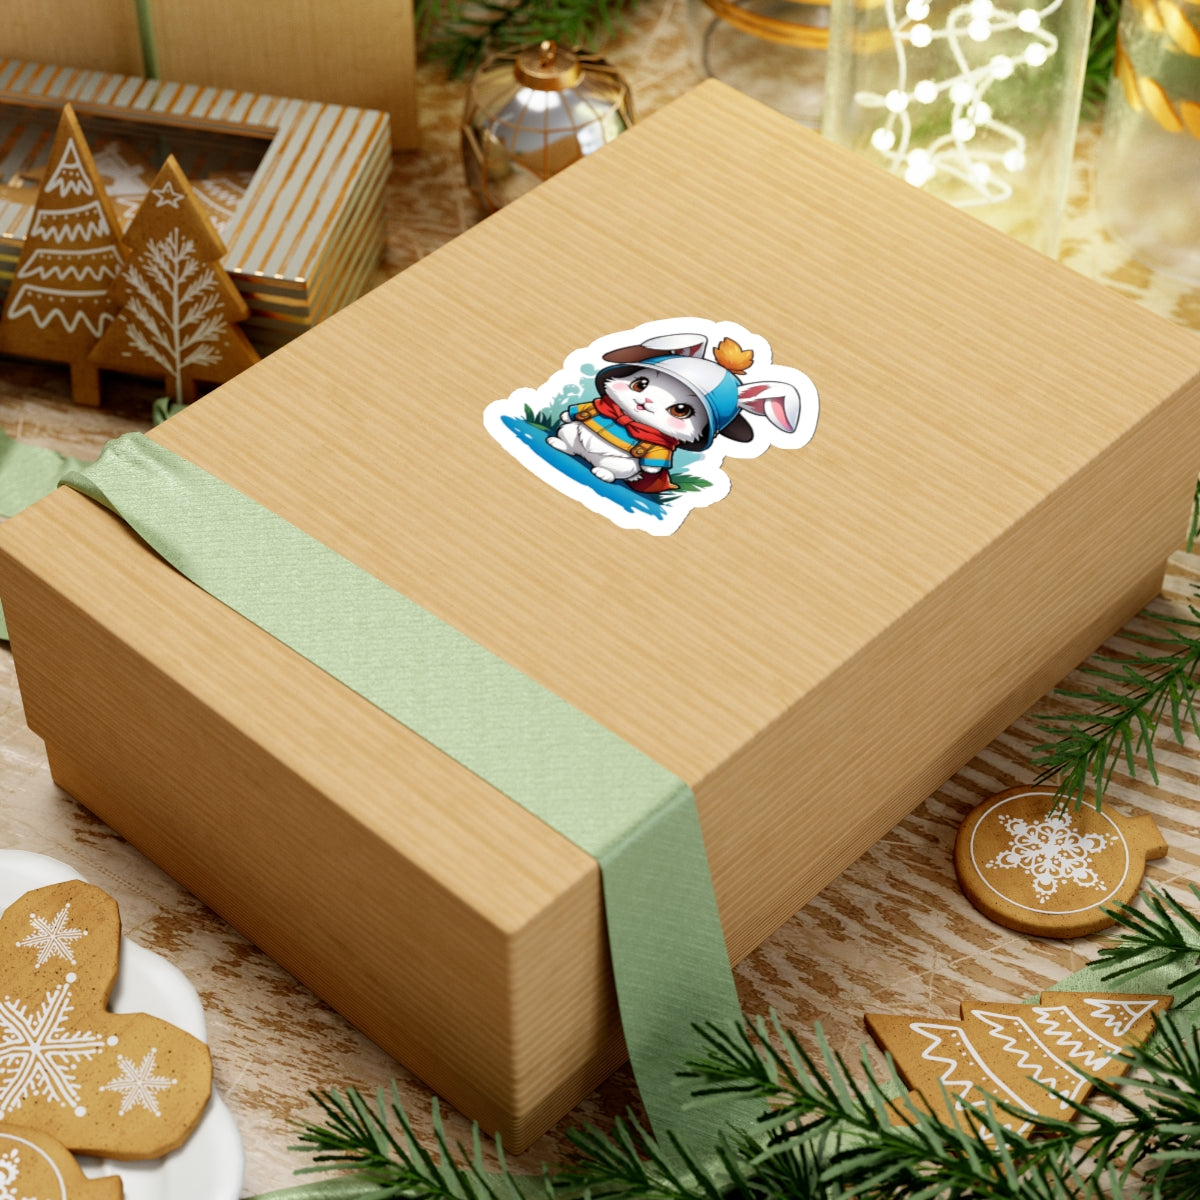 Adorable Bunny Charm Sticker | Bunny Sticker on Cardboard Box for Box, Fridge, Mirror